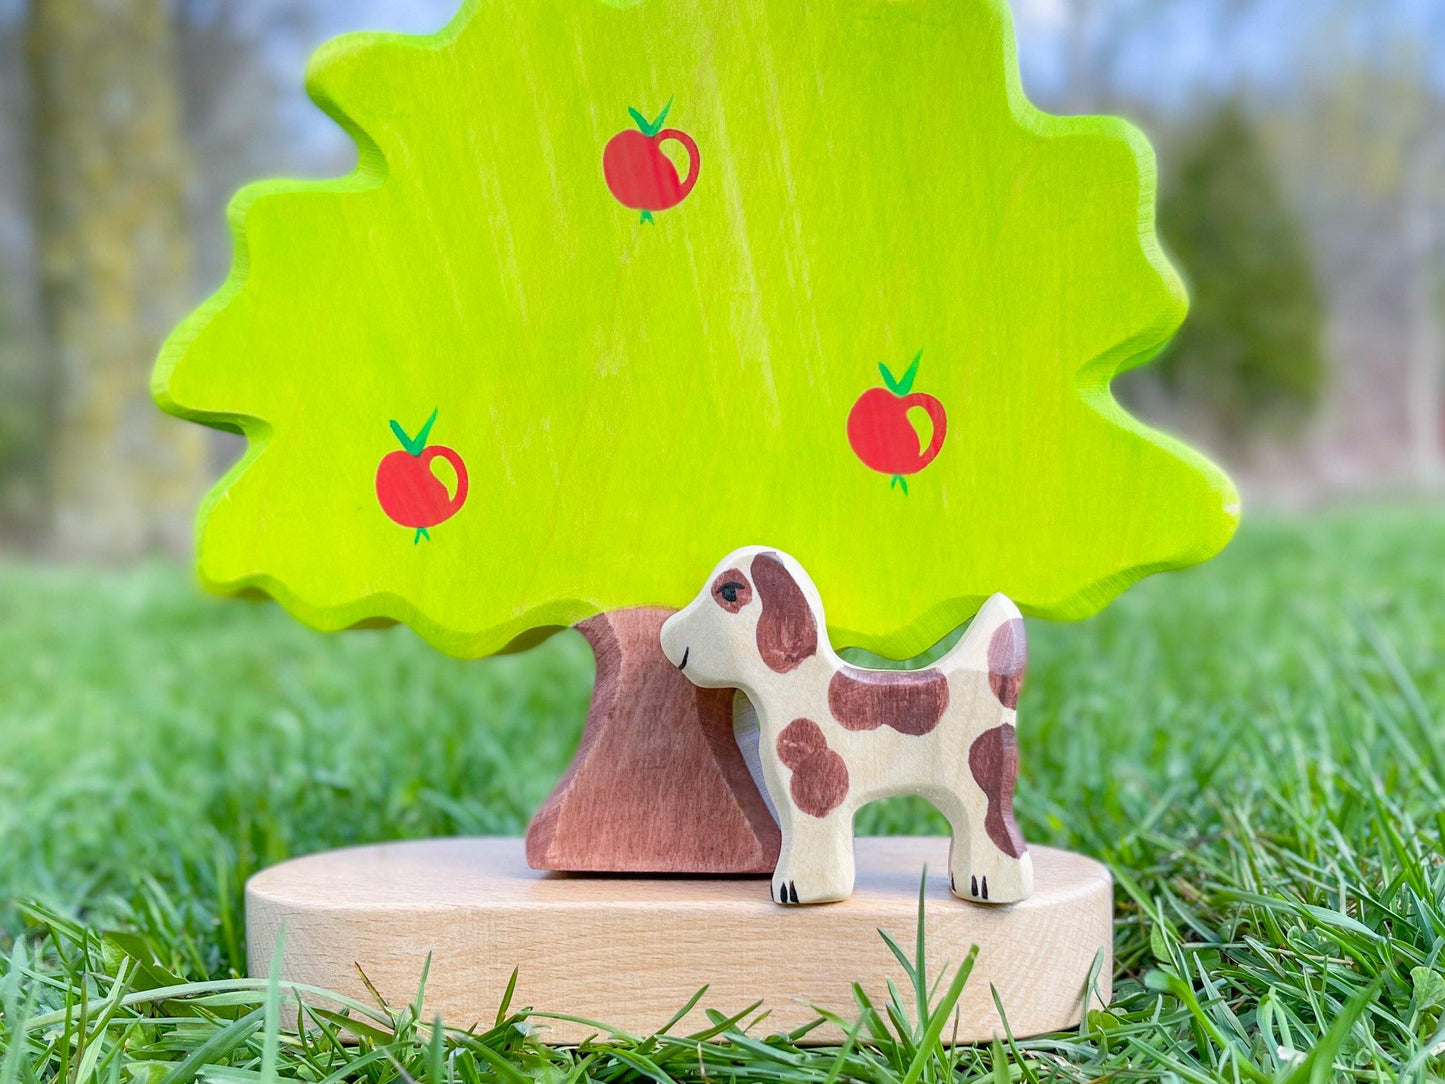 Holztiger - Farmdog Small Wooden Figure - Holztiger - littleyoyo.ca